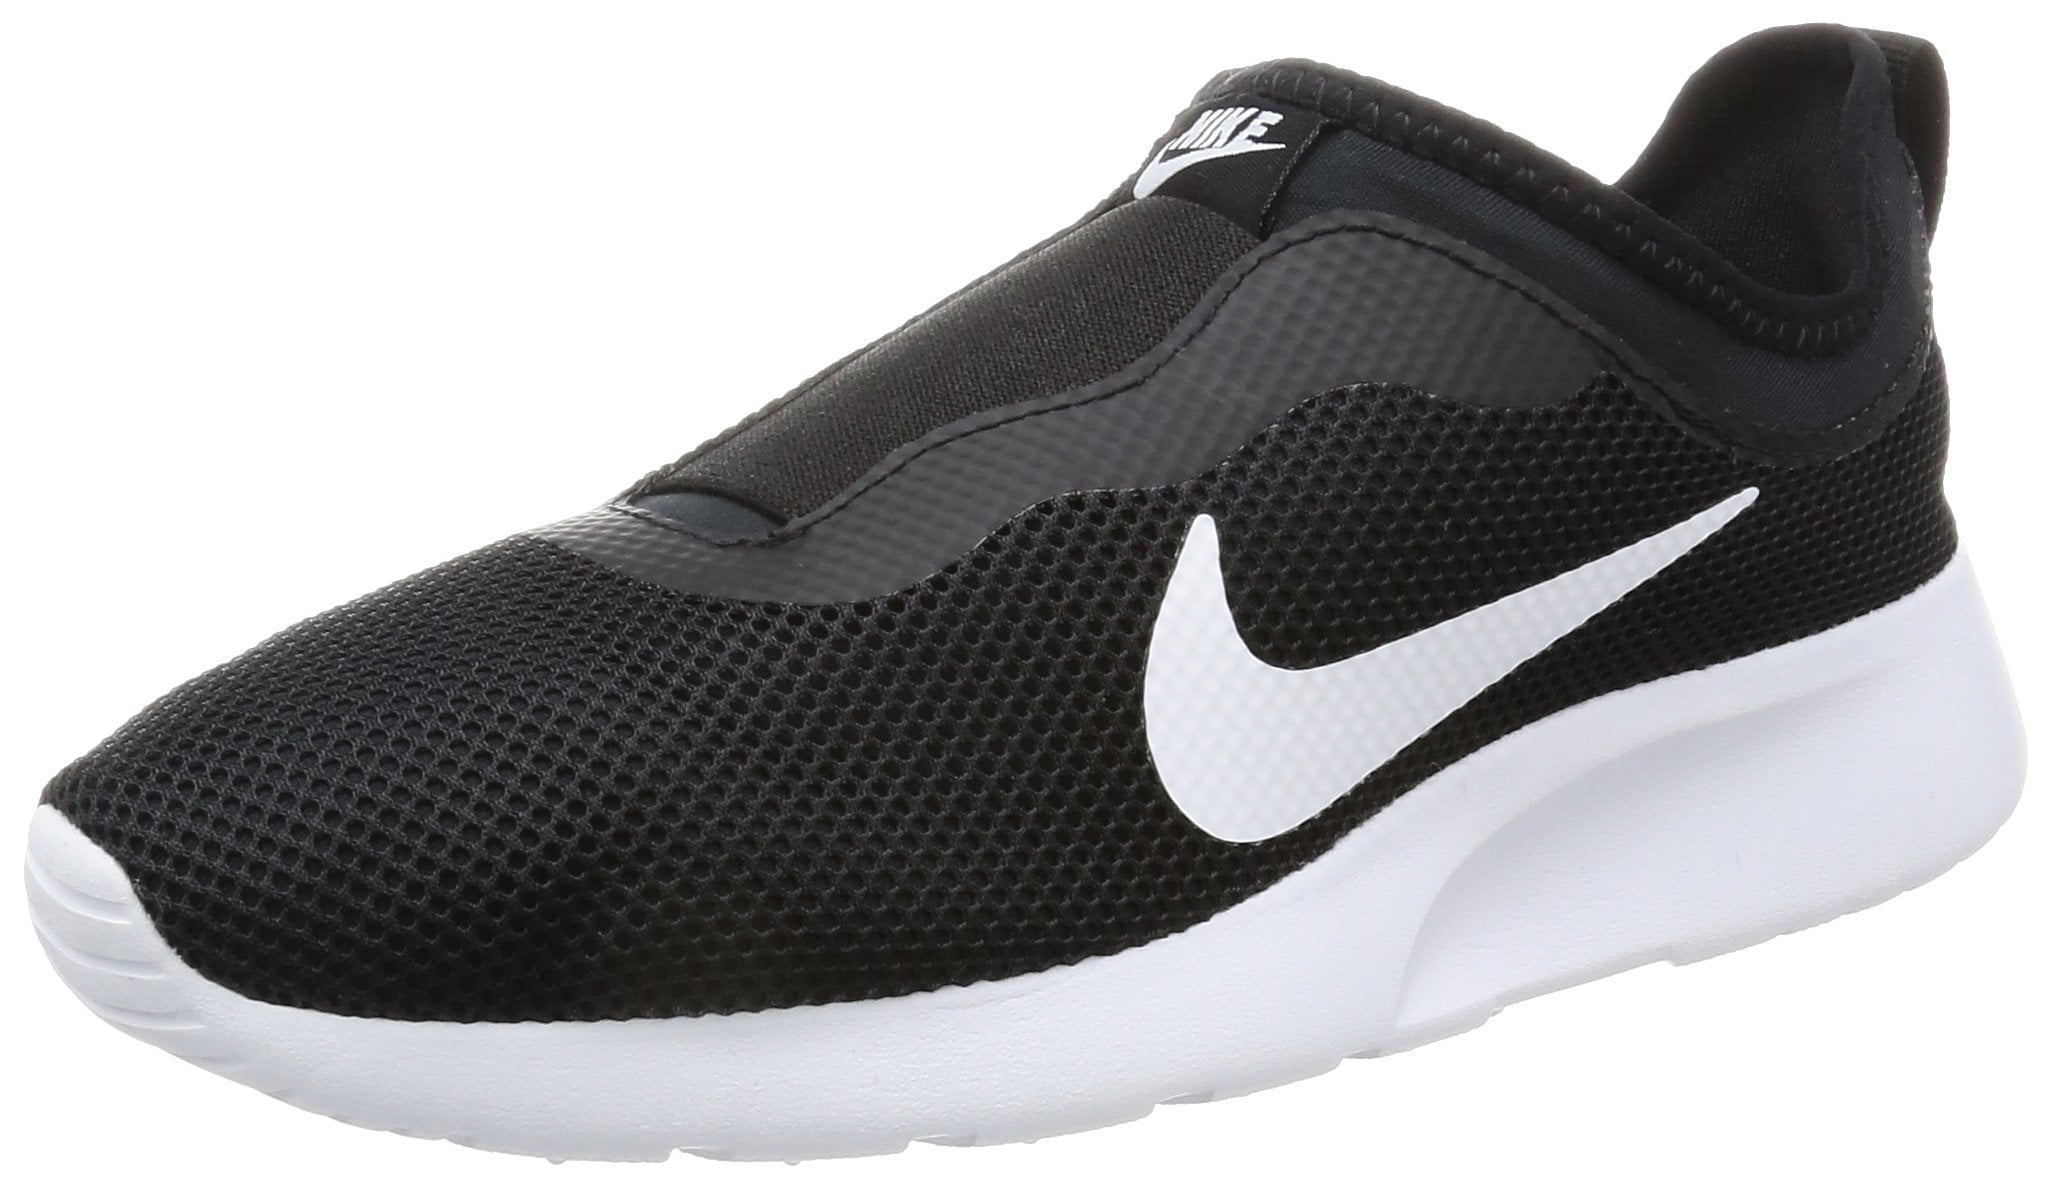 Nike Women's Tanjun Slip-On Shoe, Black/White, B(M) US - Walmart.com